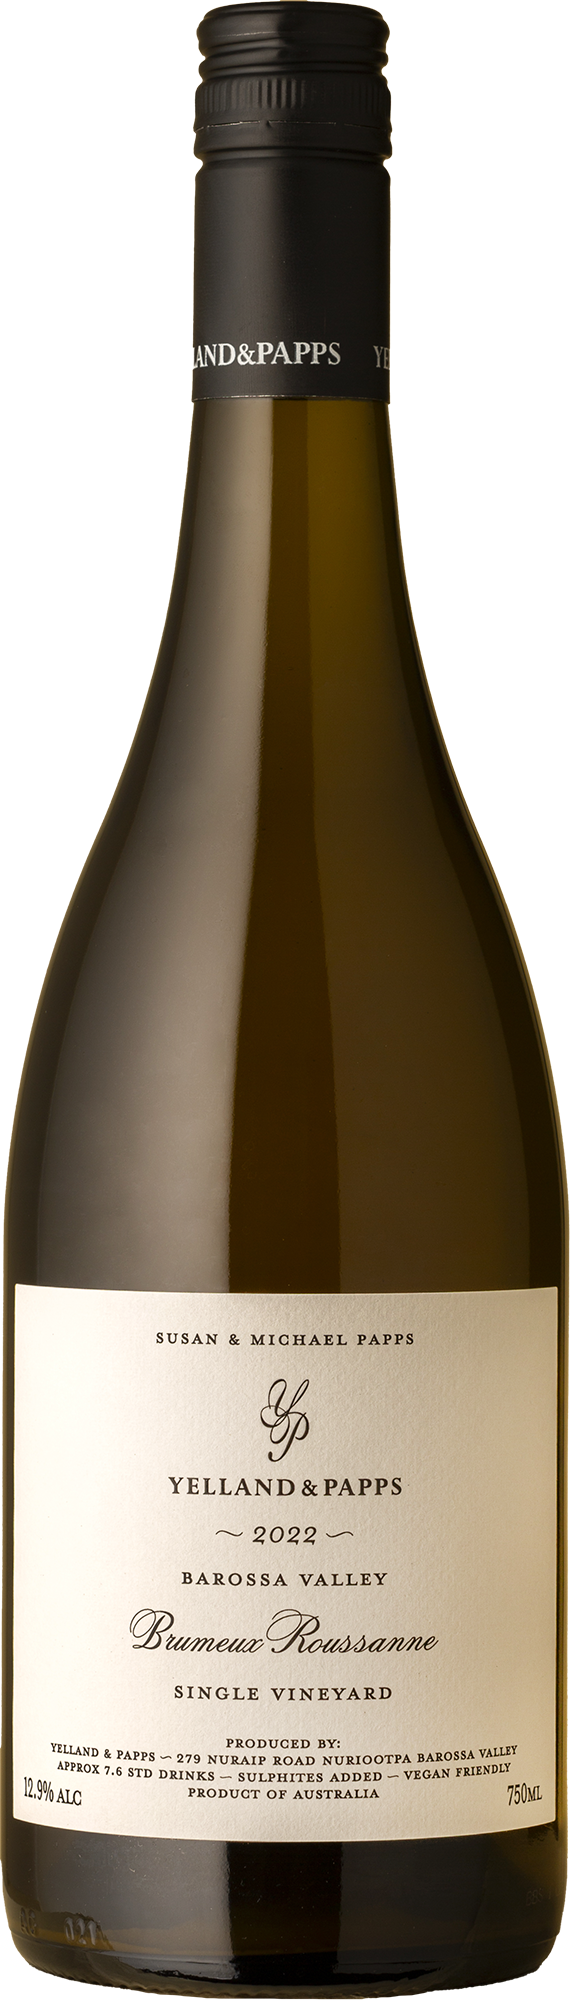 Yelland & Papps - Single Vineyard Brumeux Roussanne 2022 White Wine